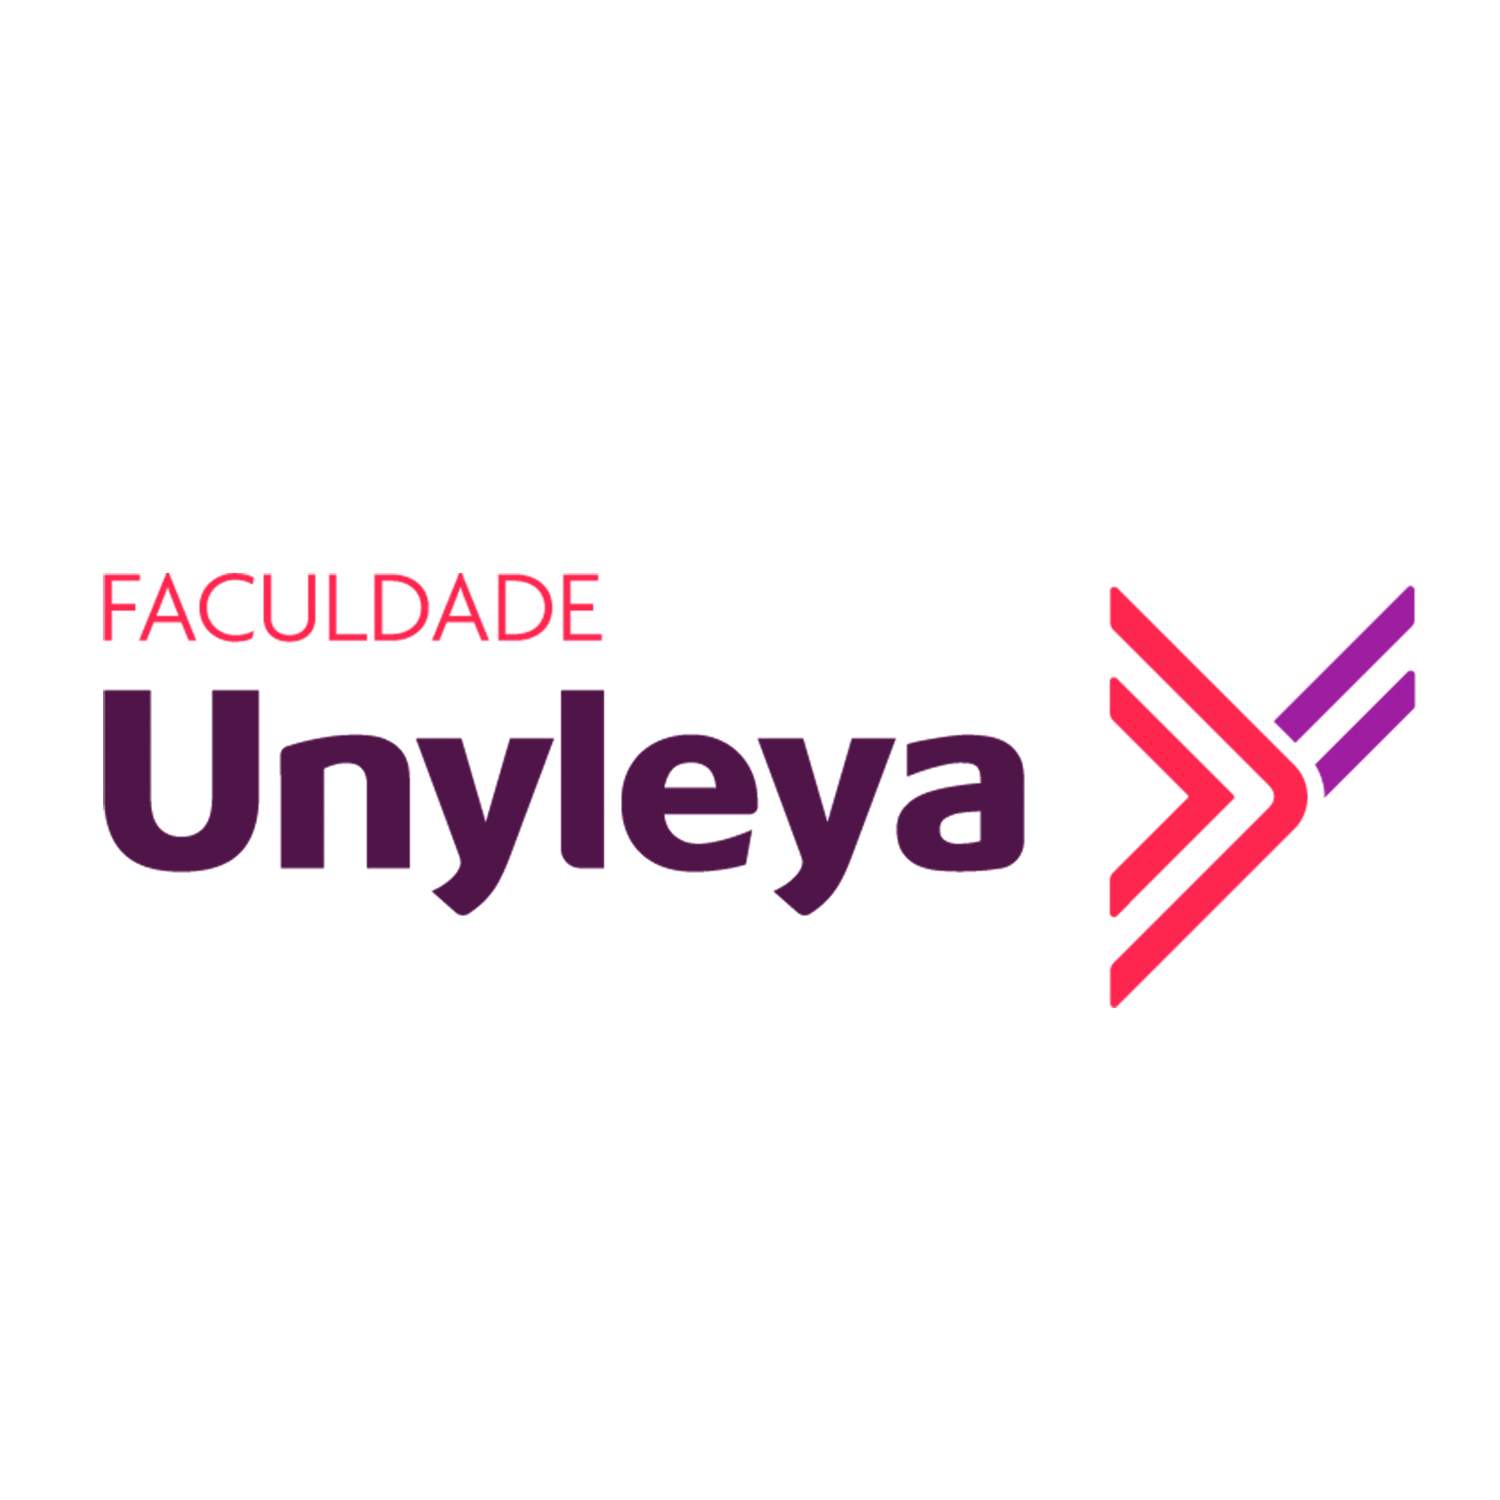 Unyleya Faculty logo